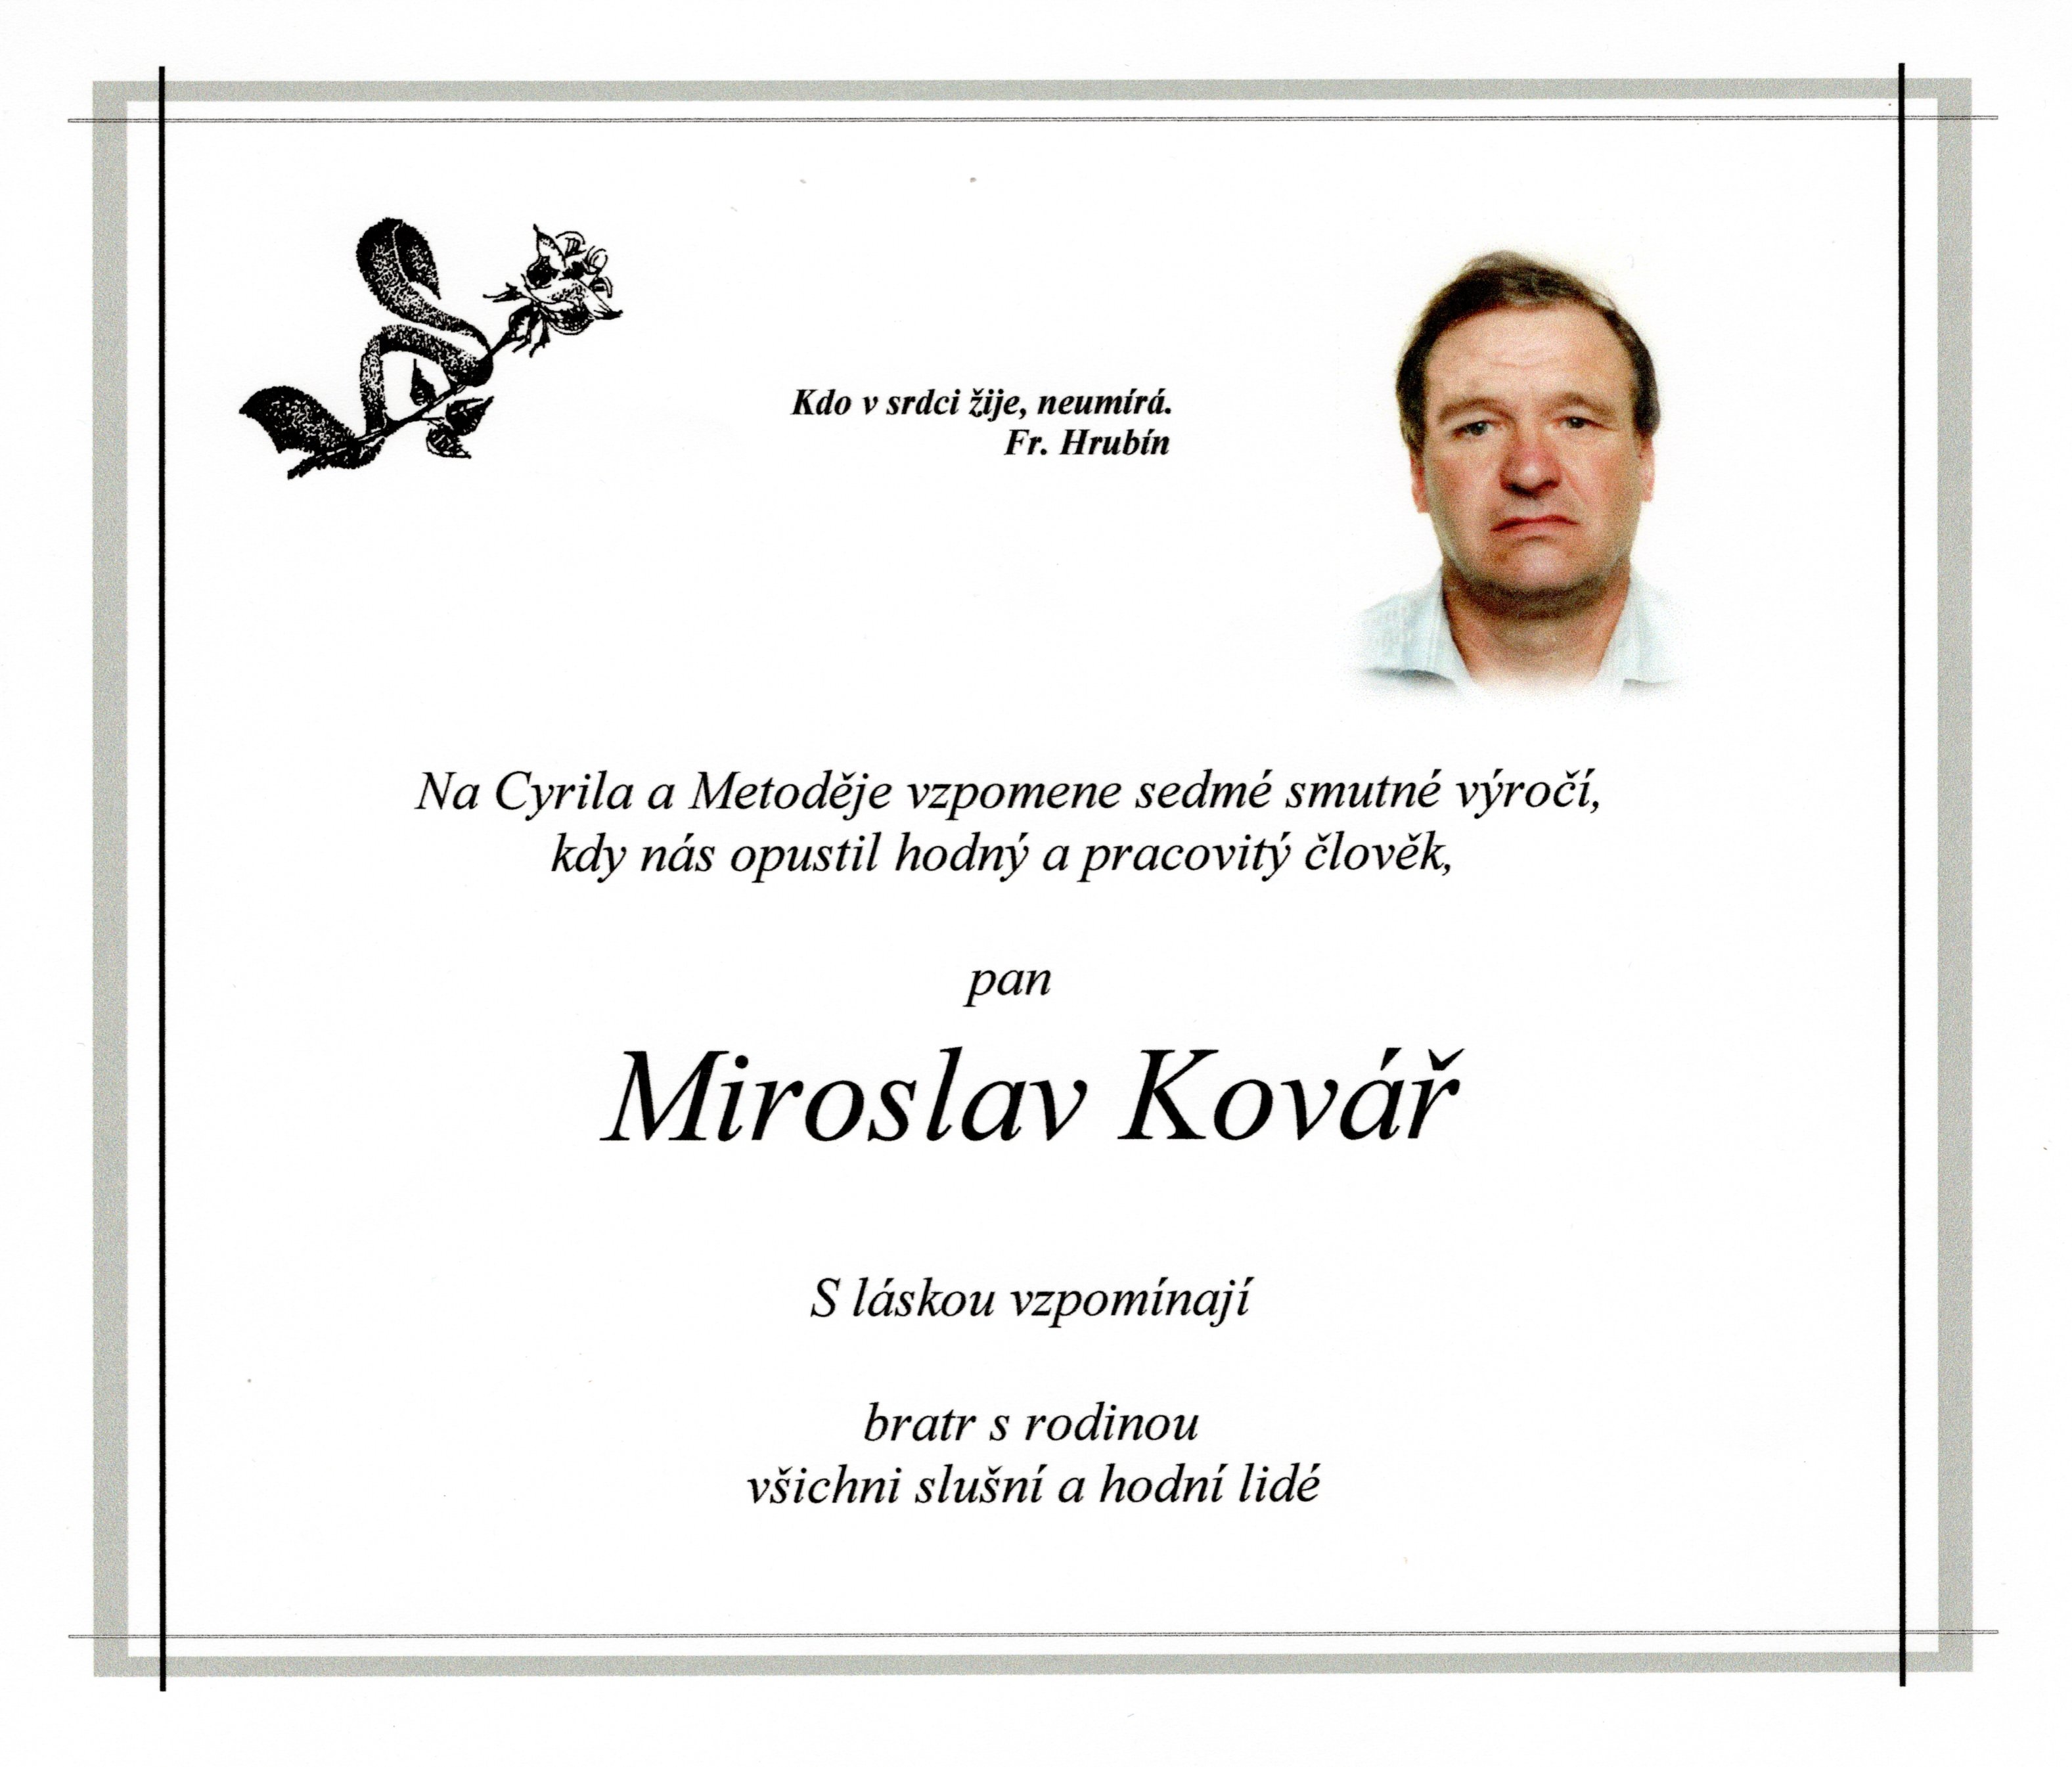 Miroslav Kovář